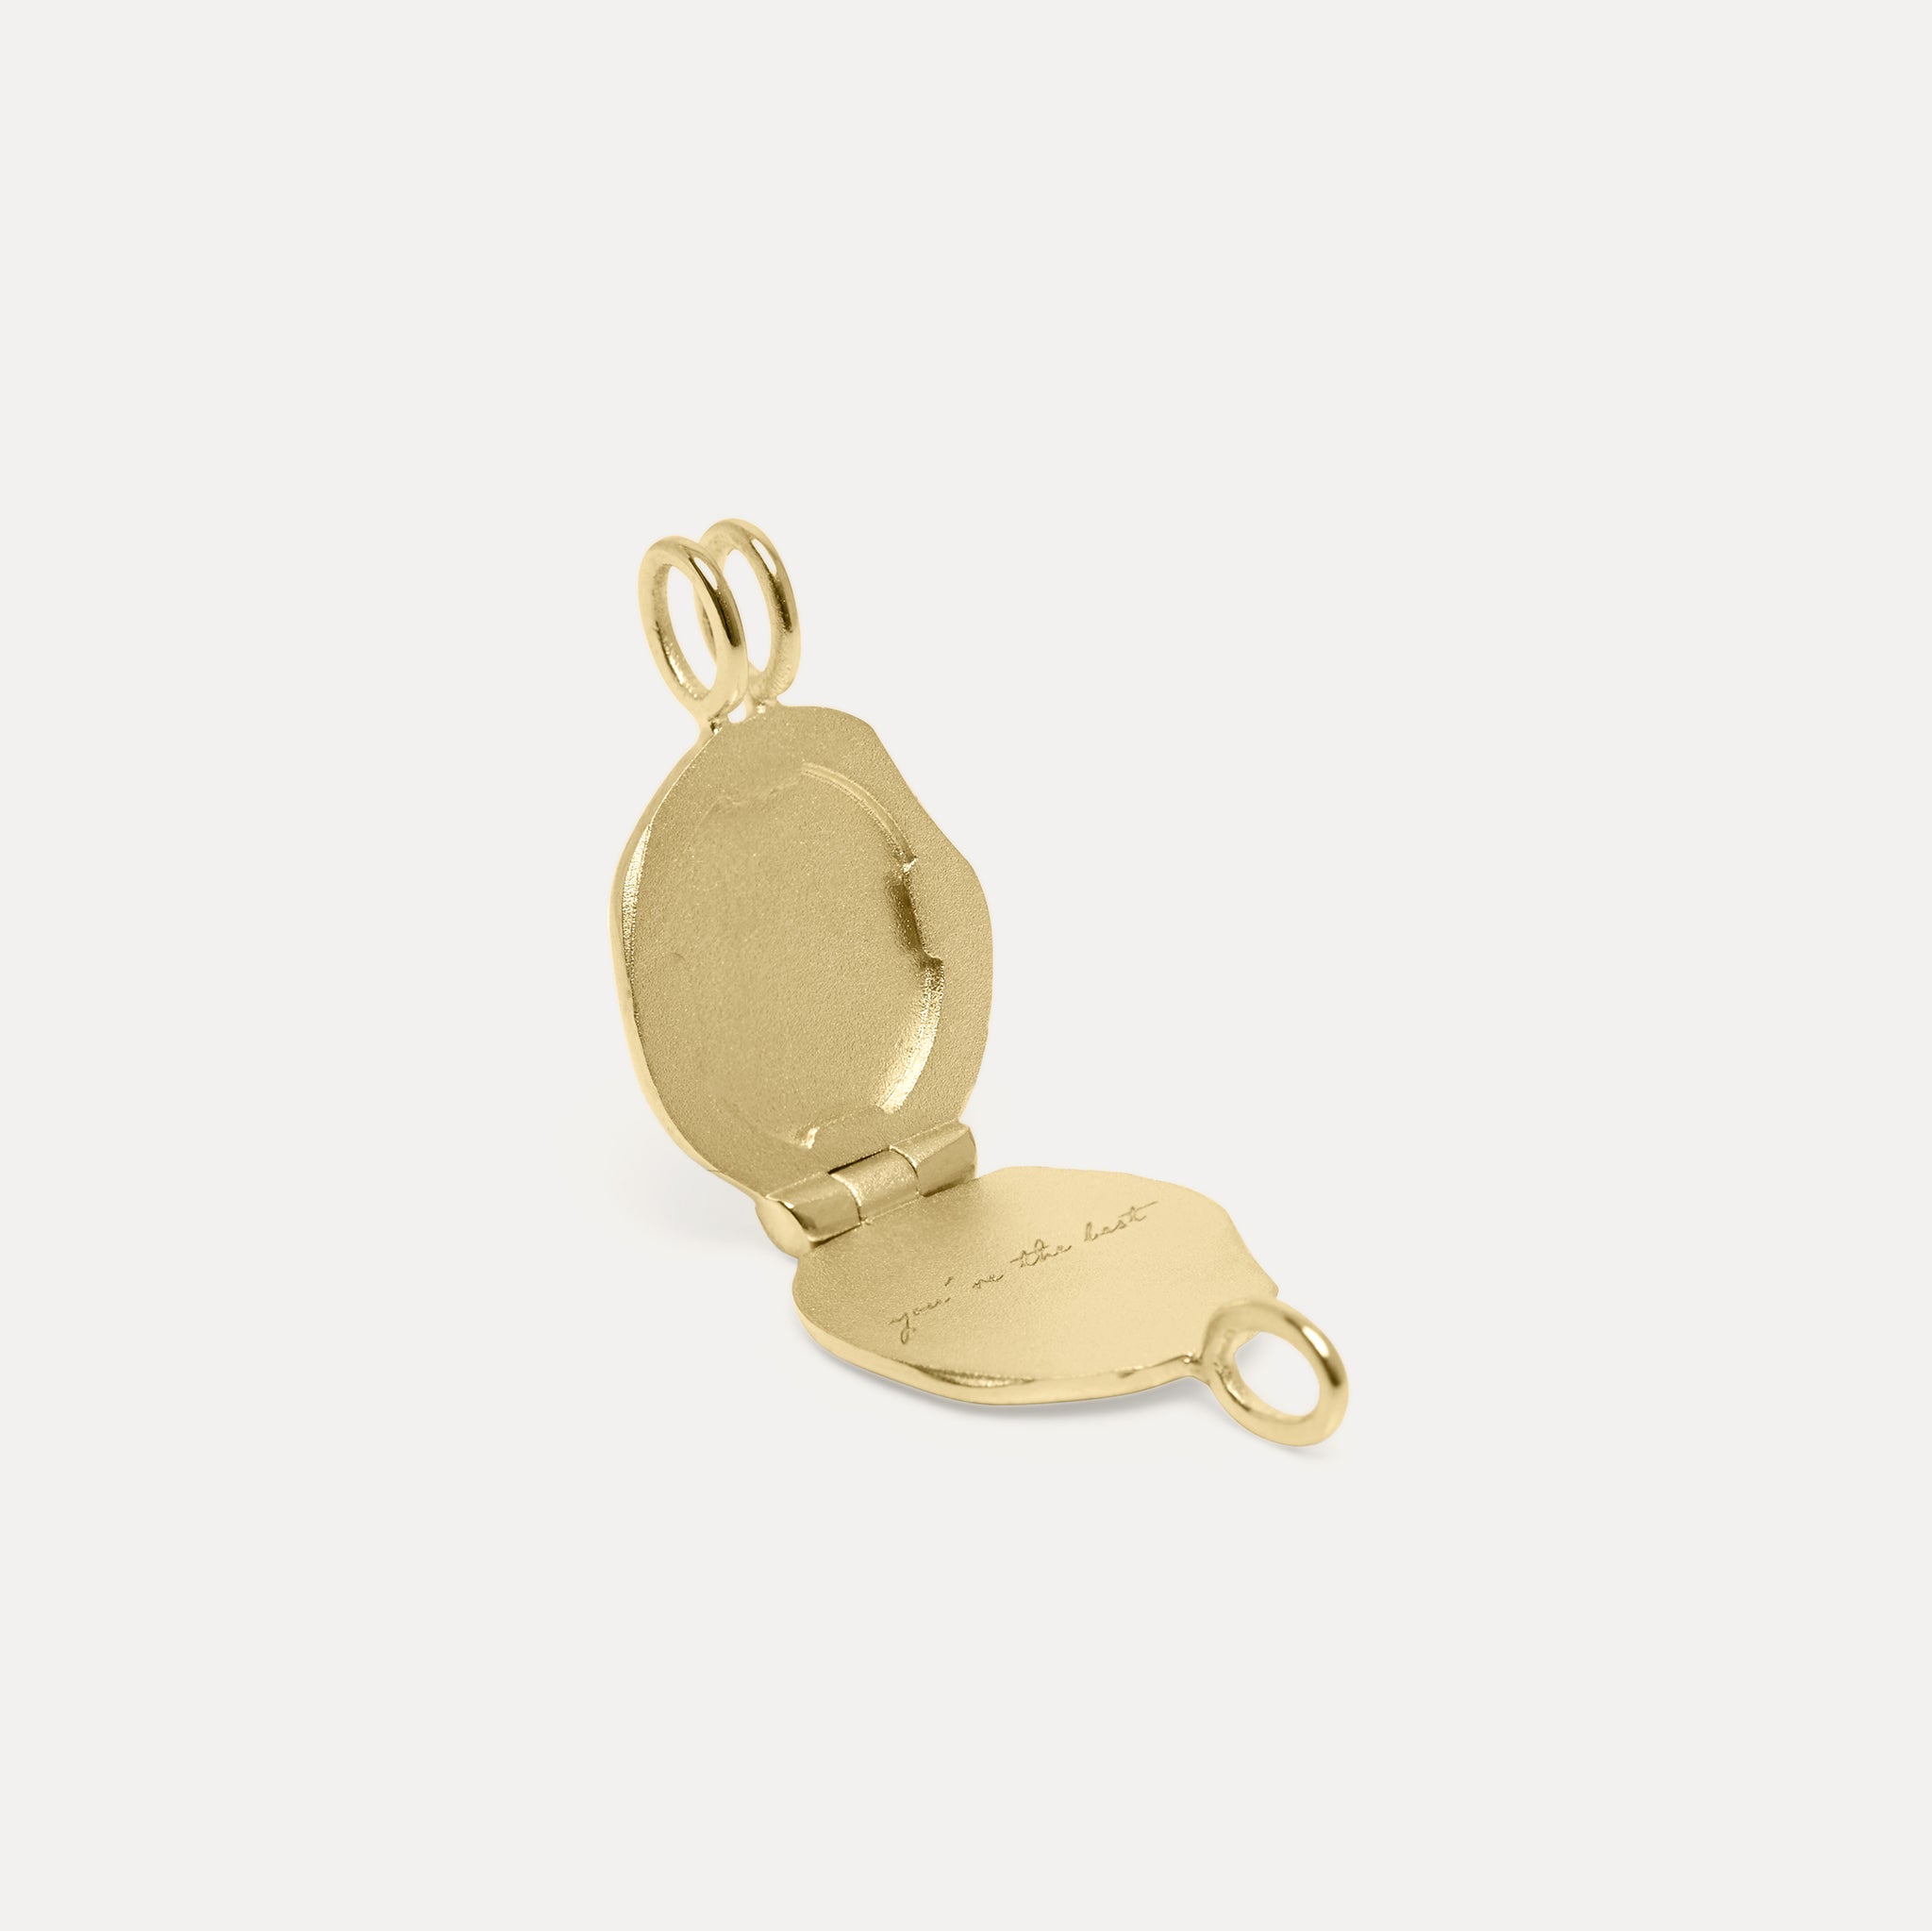 Nouveau Flower Seal Locket Pendant 14k Solid Gold